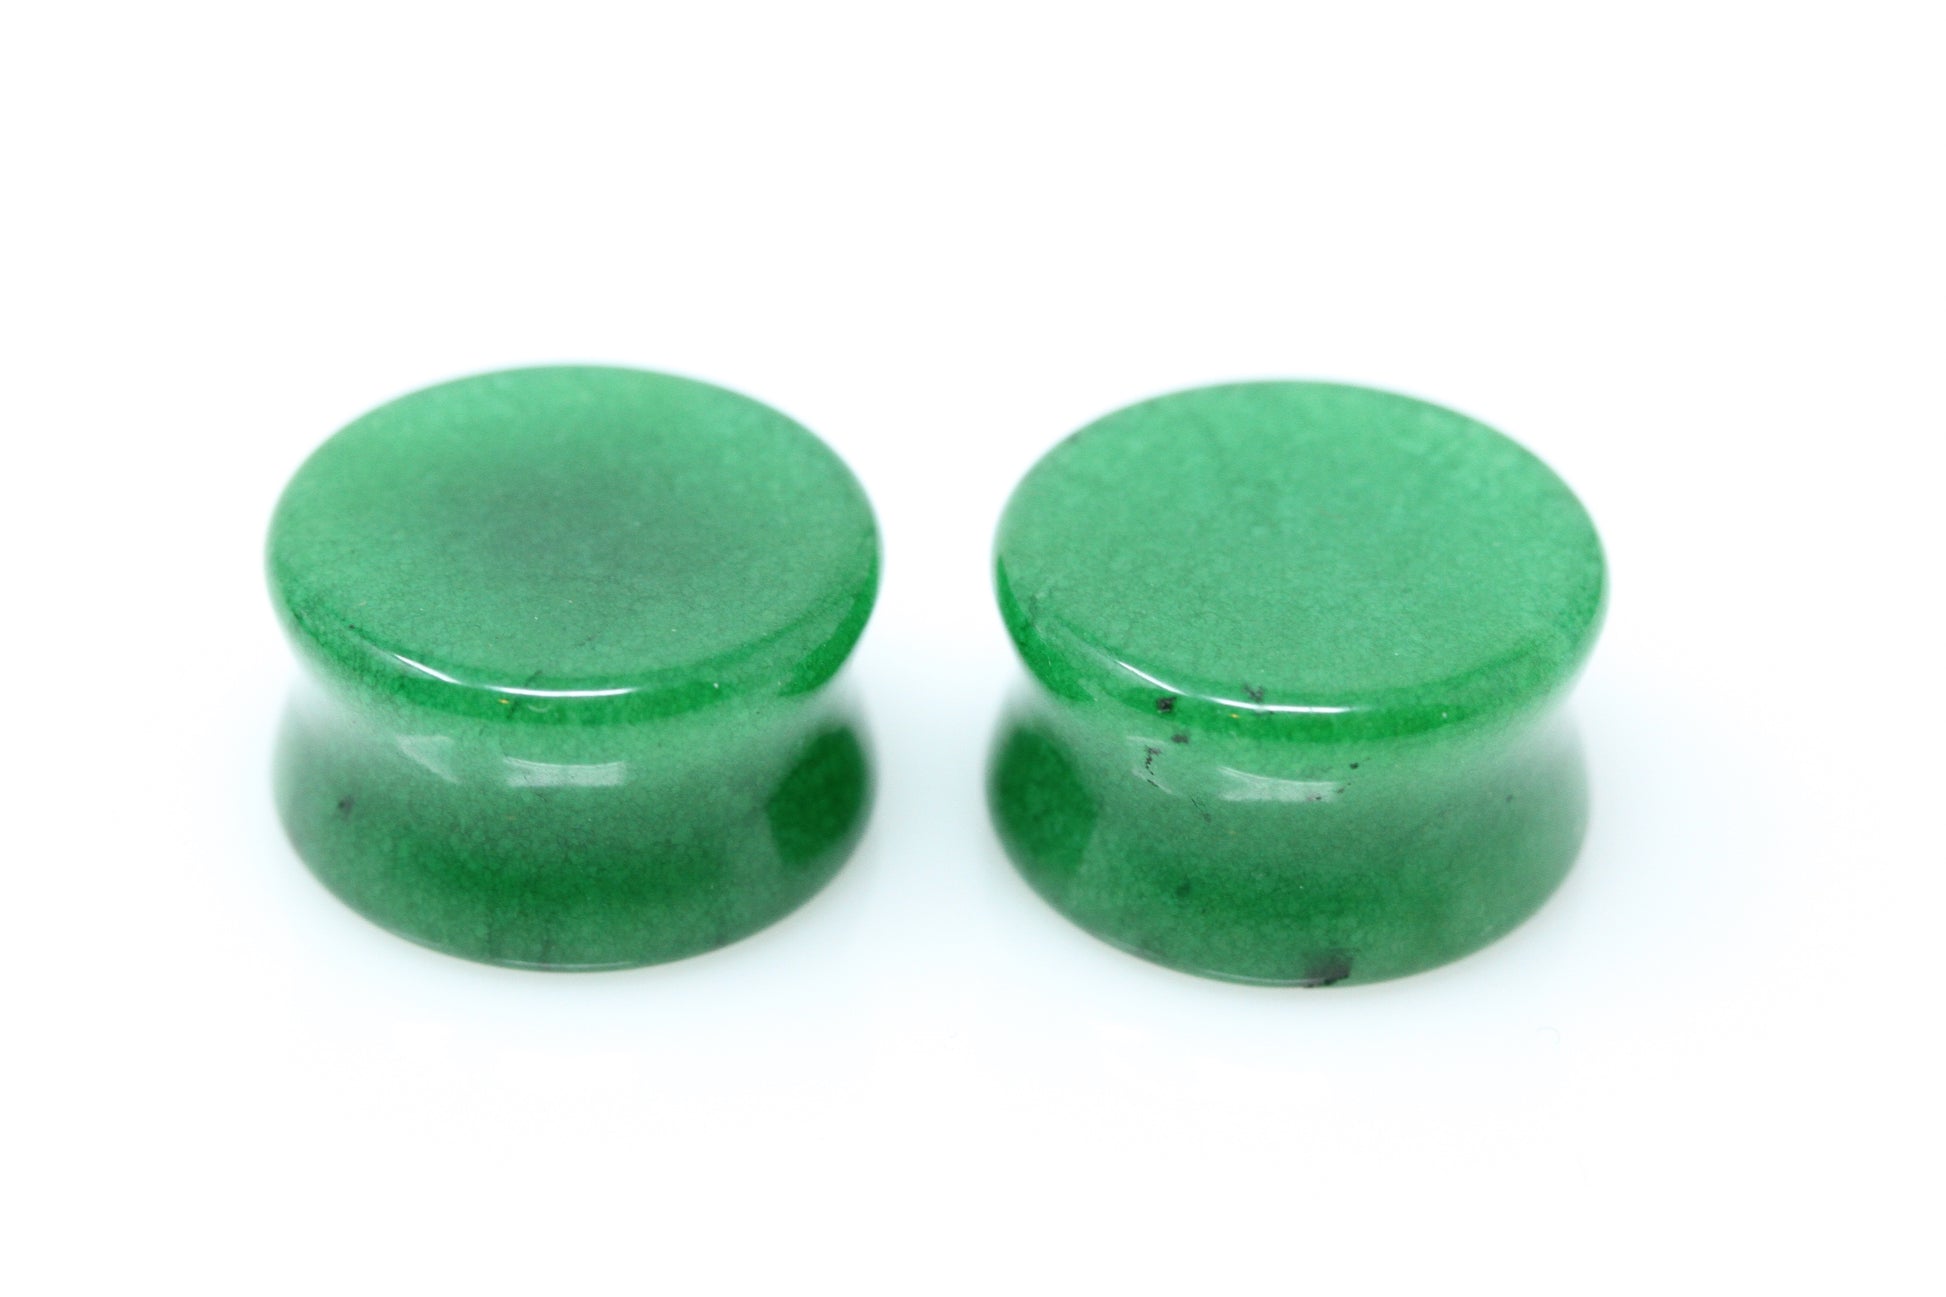 19mm green jade plugs